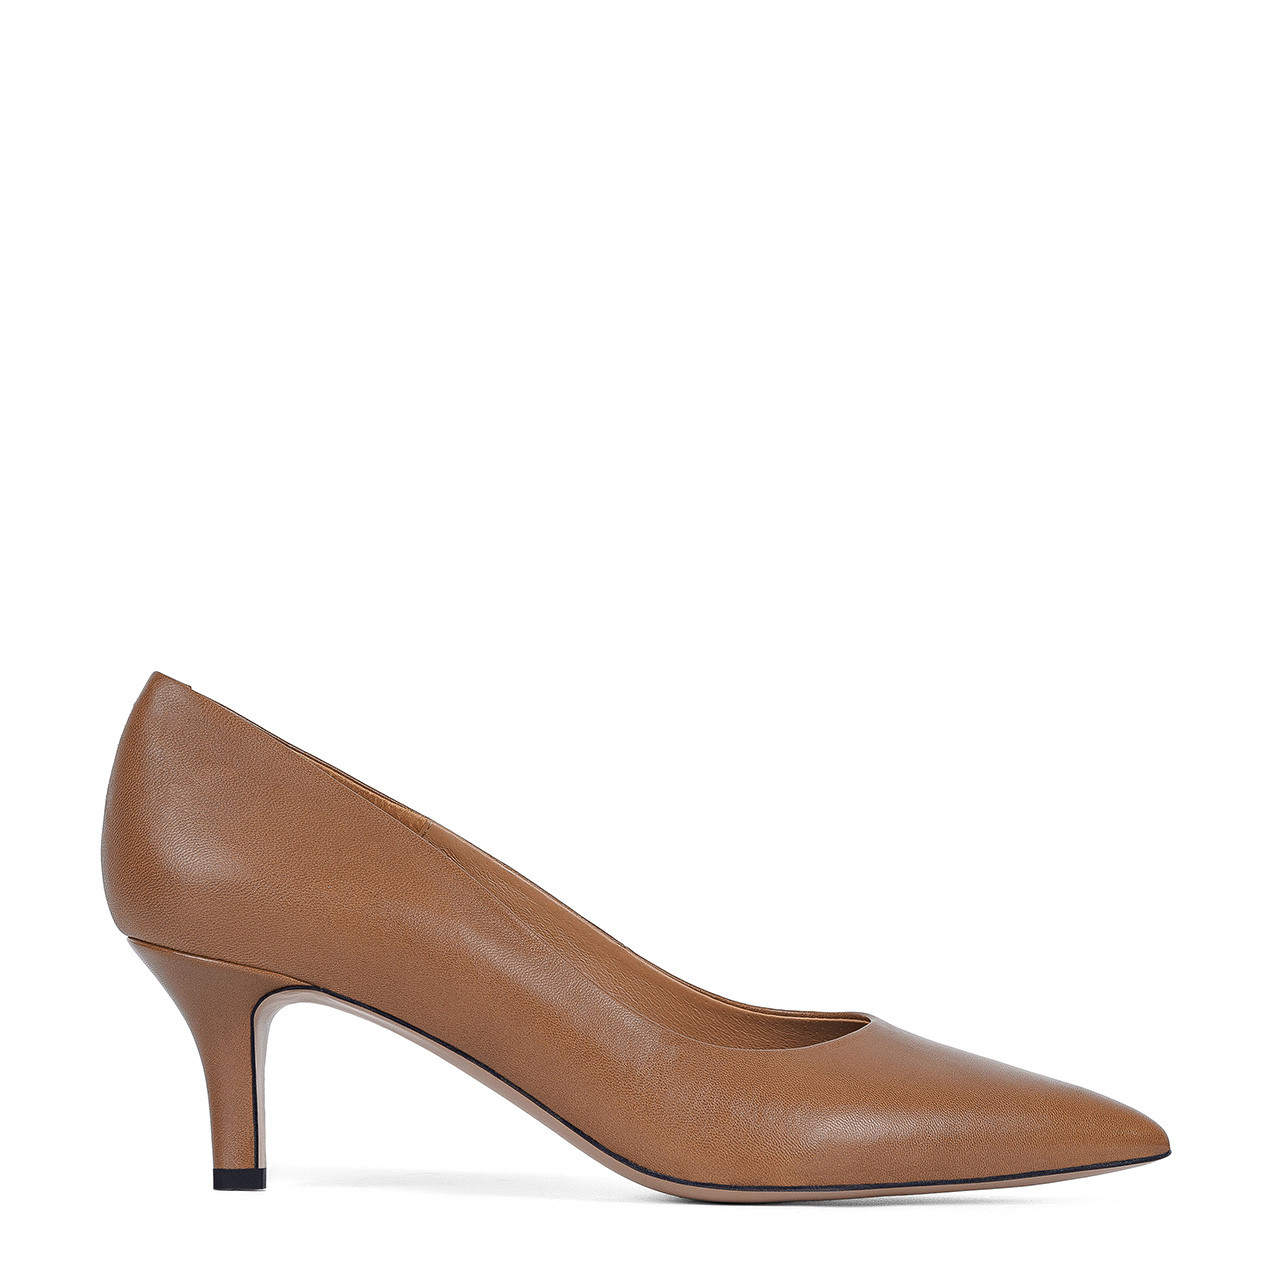 Premium leather low heels in brown color